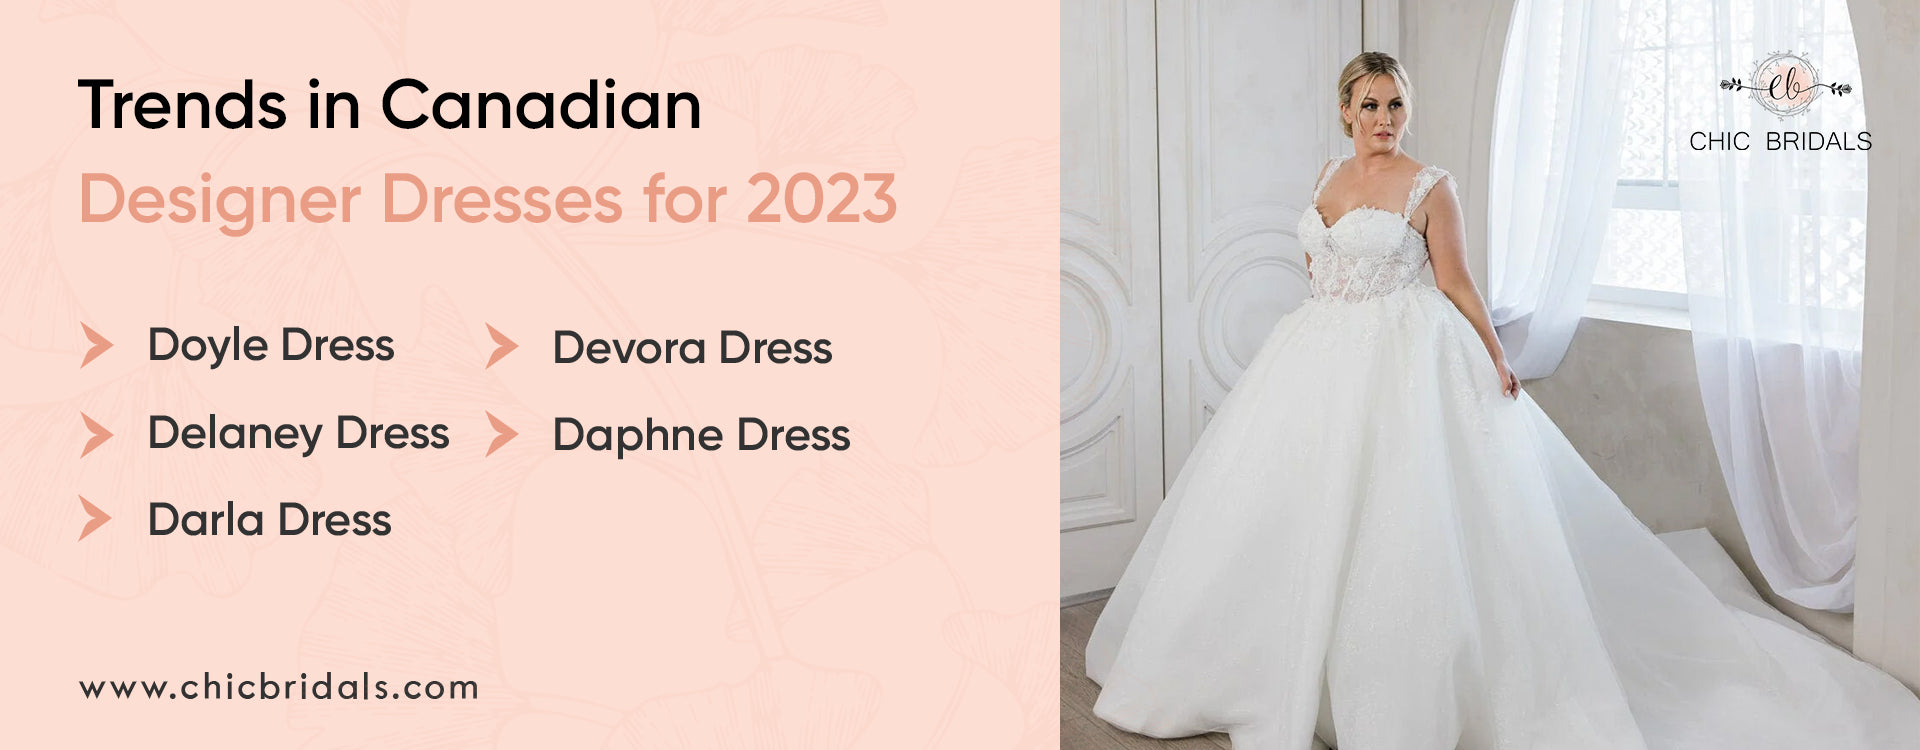 Canadian Designer Dresses Trends in 2023